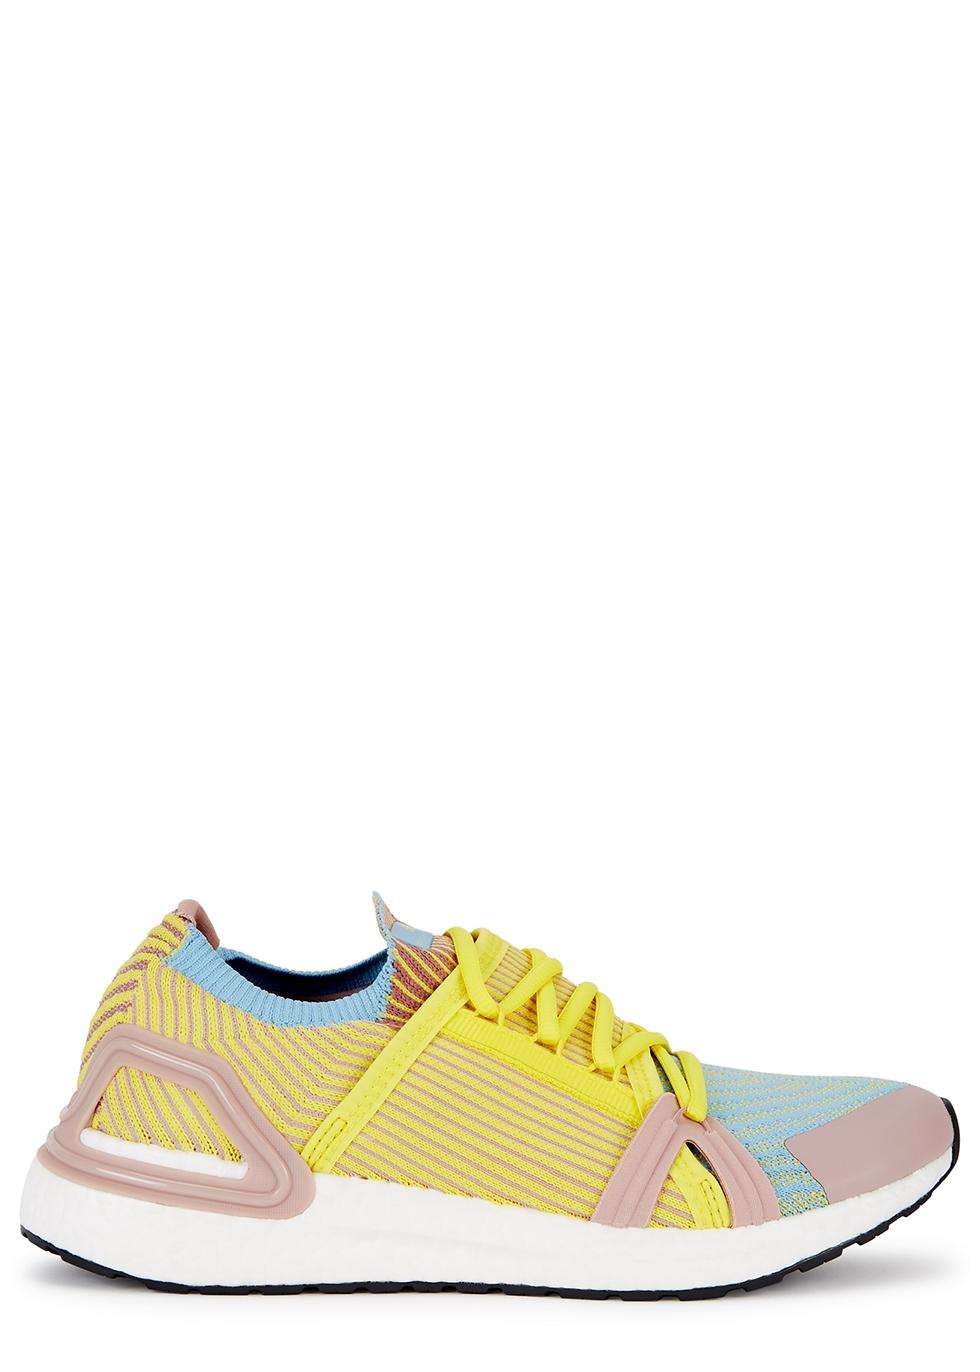 Adidas By Stella Mccartney Rubber Ultraboost S Sneaker In Dusty Rose Yellow Save 65 Lyst